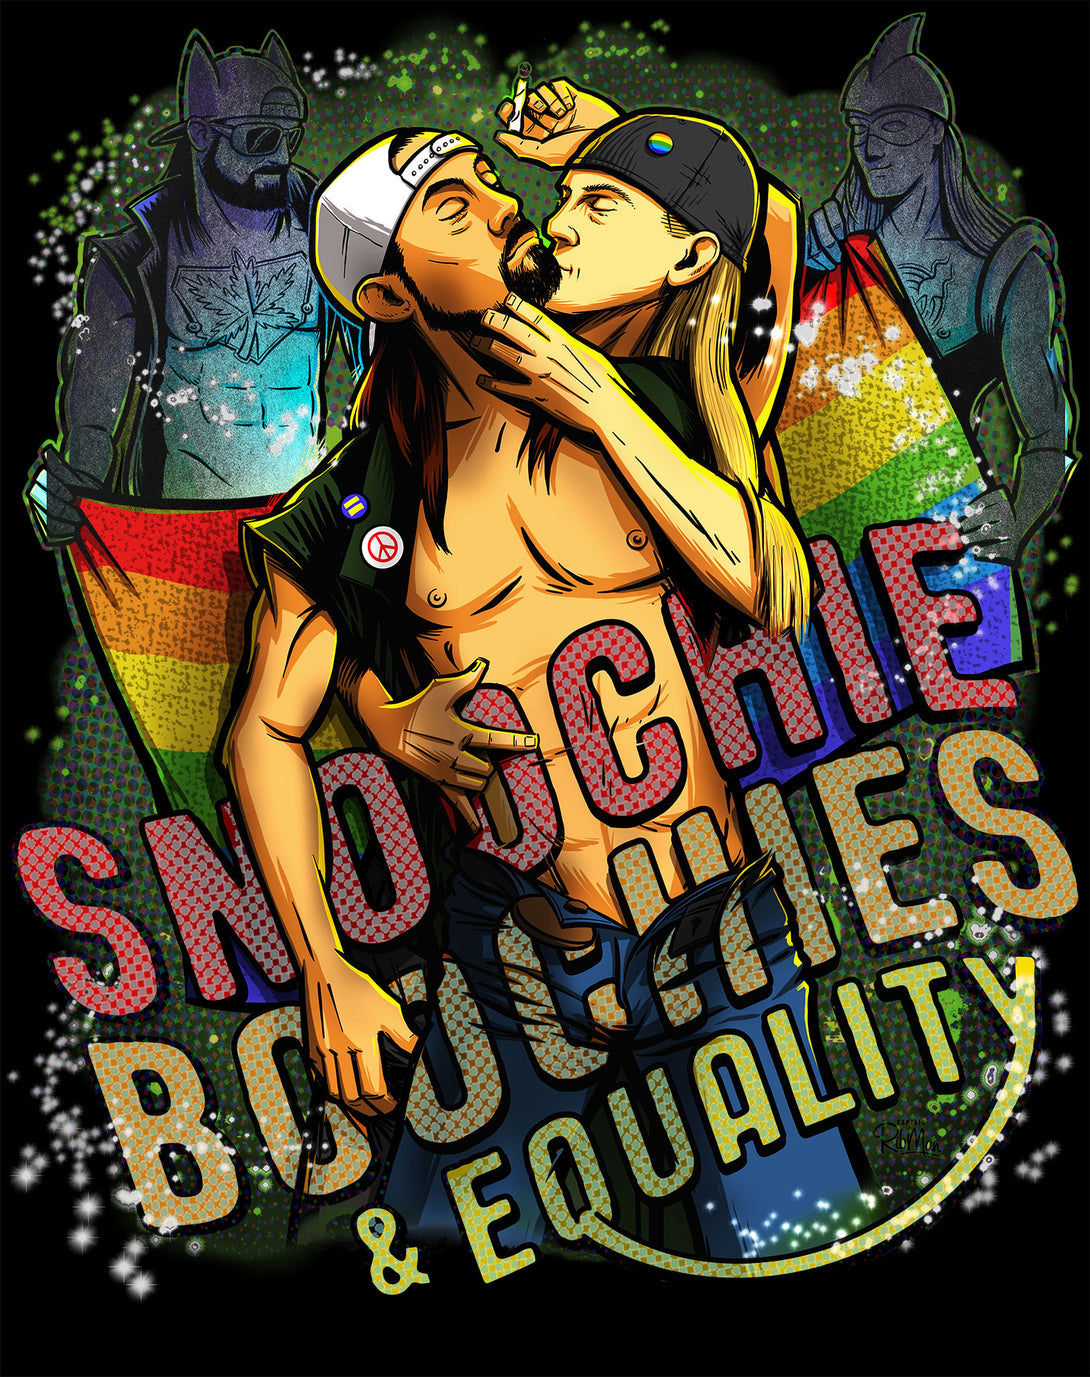 Kevin Smith Jay & Silent Bob Reboot LGBTQ Splash LDN Edition Official Sweatshirt Black - Urban Species Design Close Up